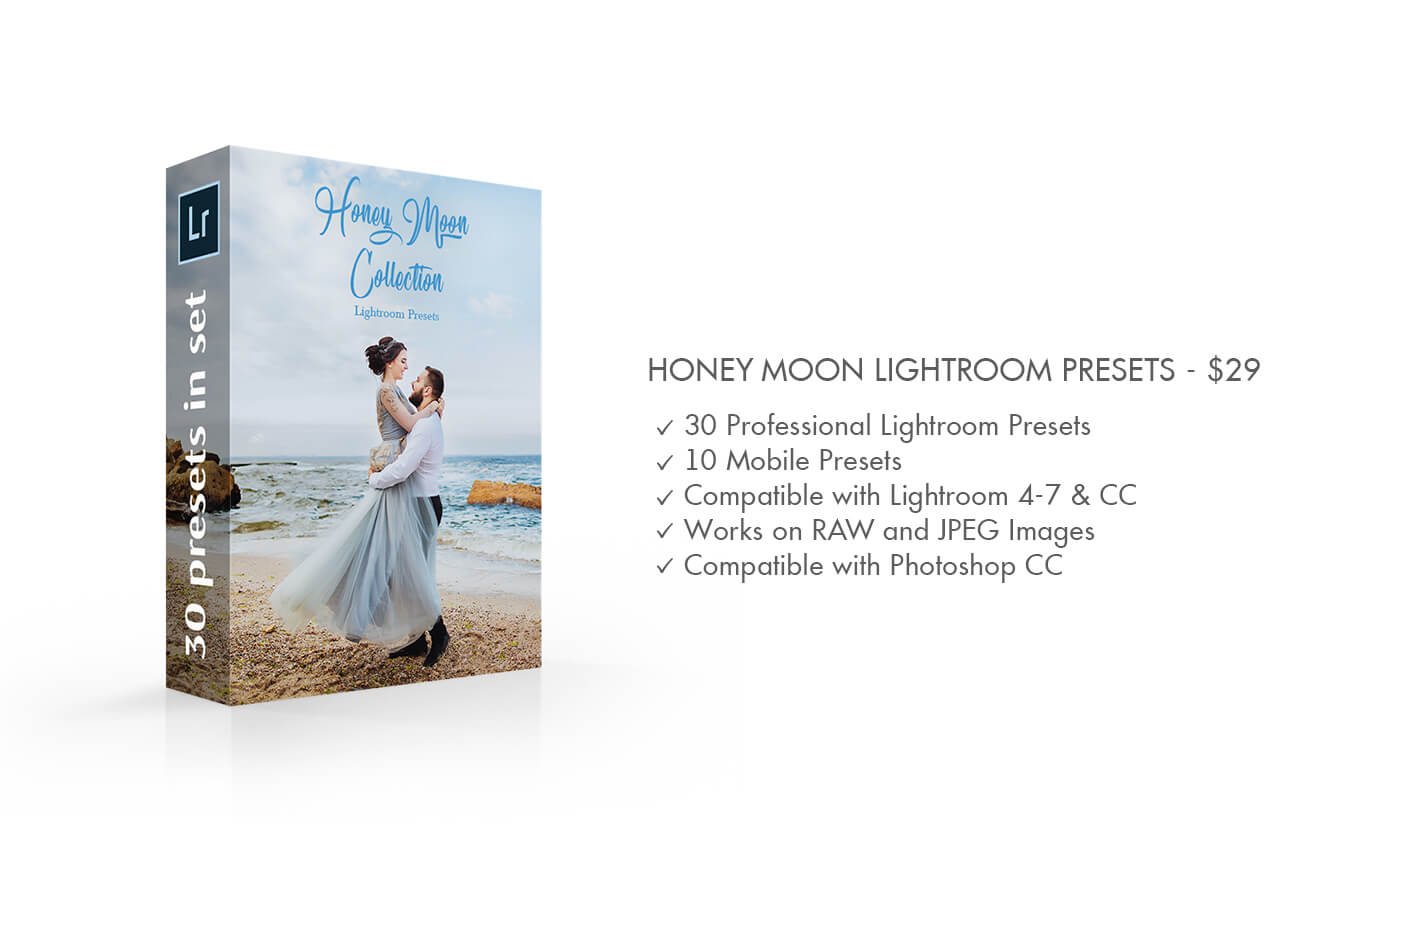 Honey Moon Lightroom Presetspreview image.